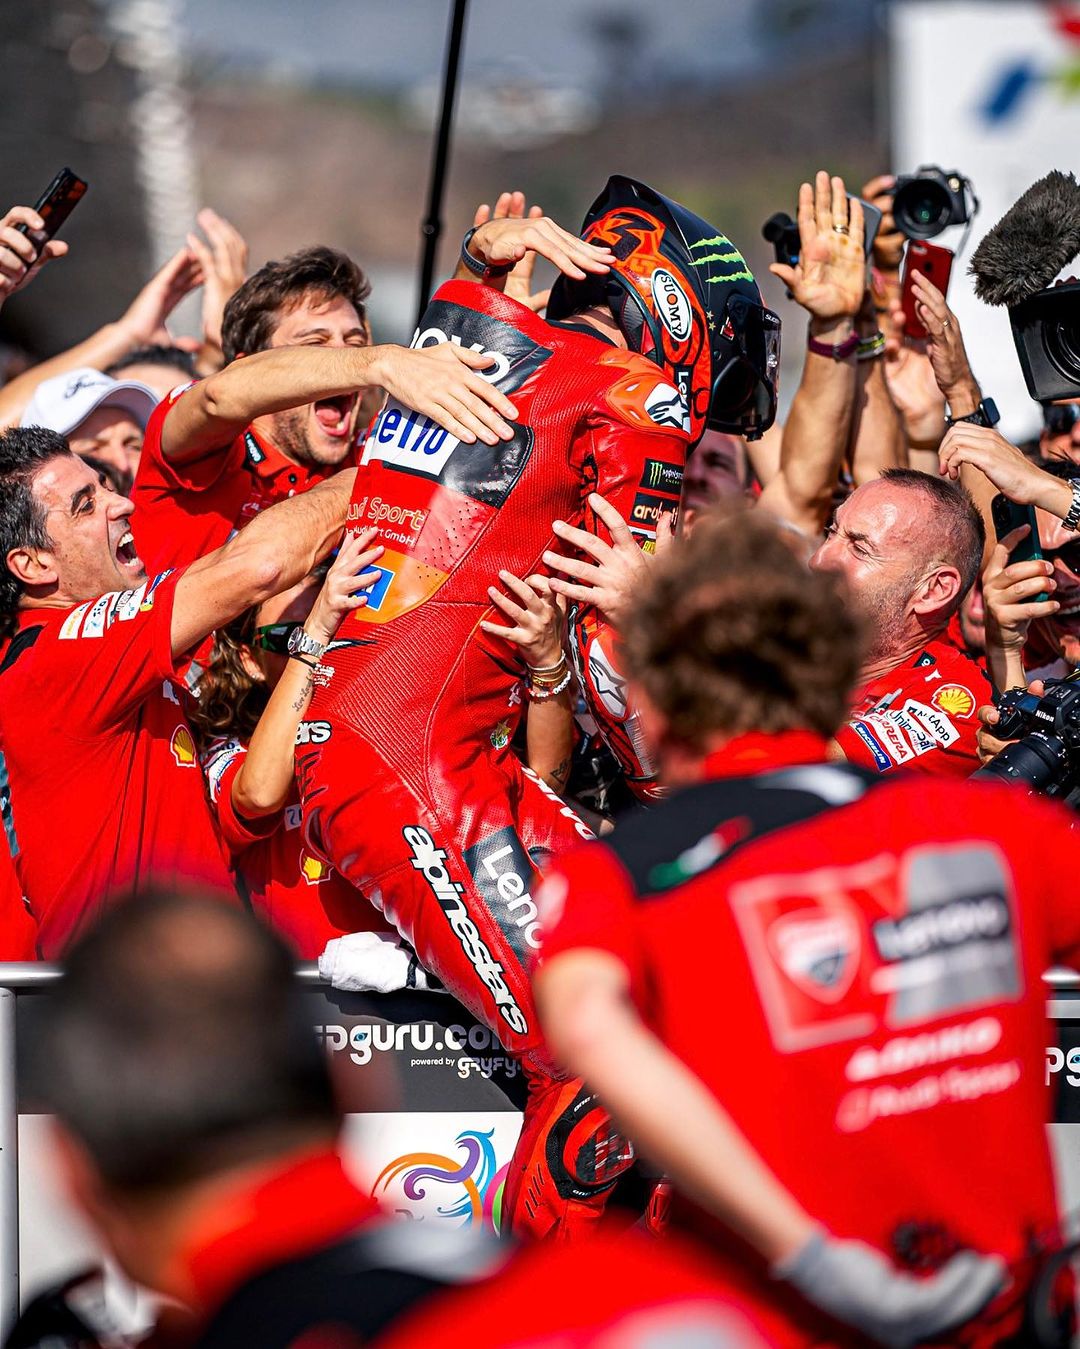 Raih Podium di MotoGP Mandalika, Bagnaia: Jadi Titik Balik Kemenangan Usai Alami Cidera